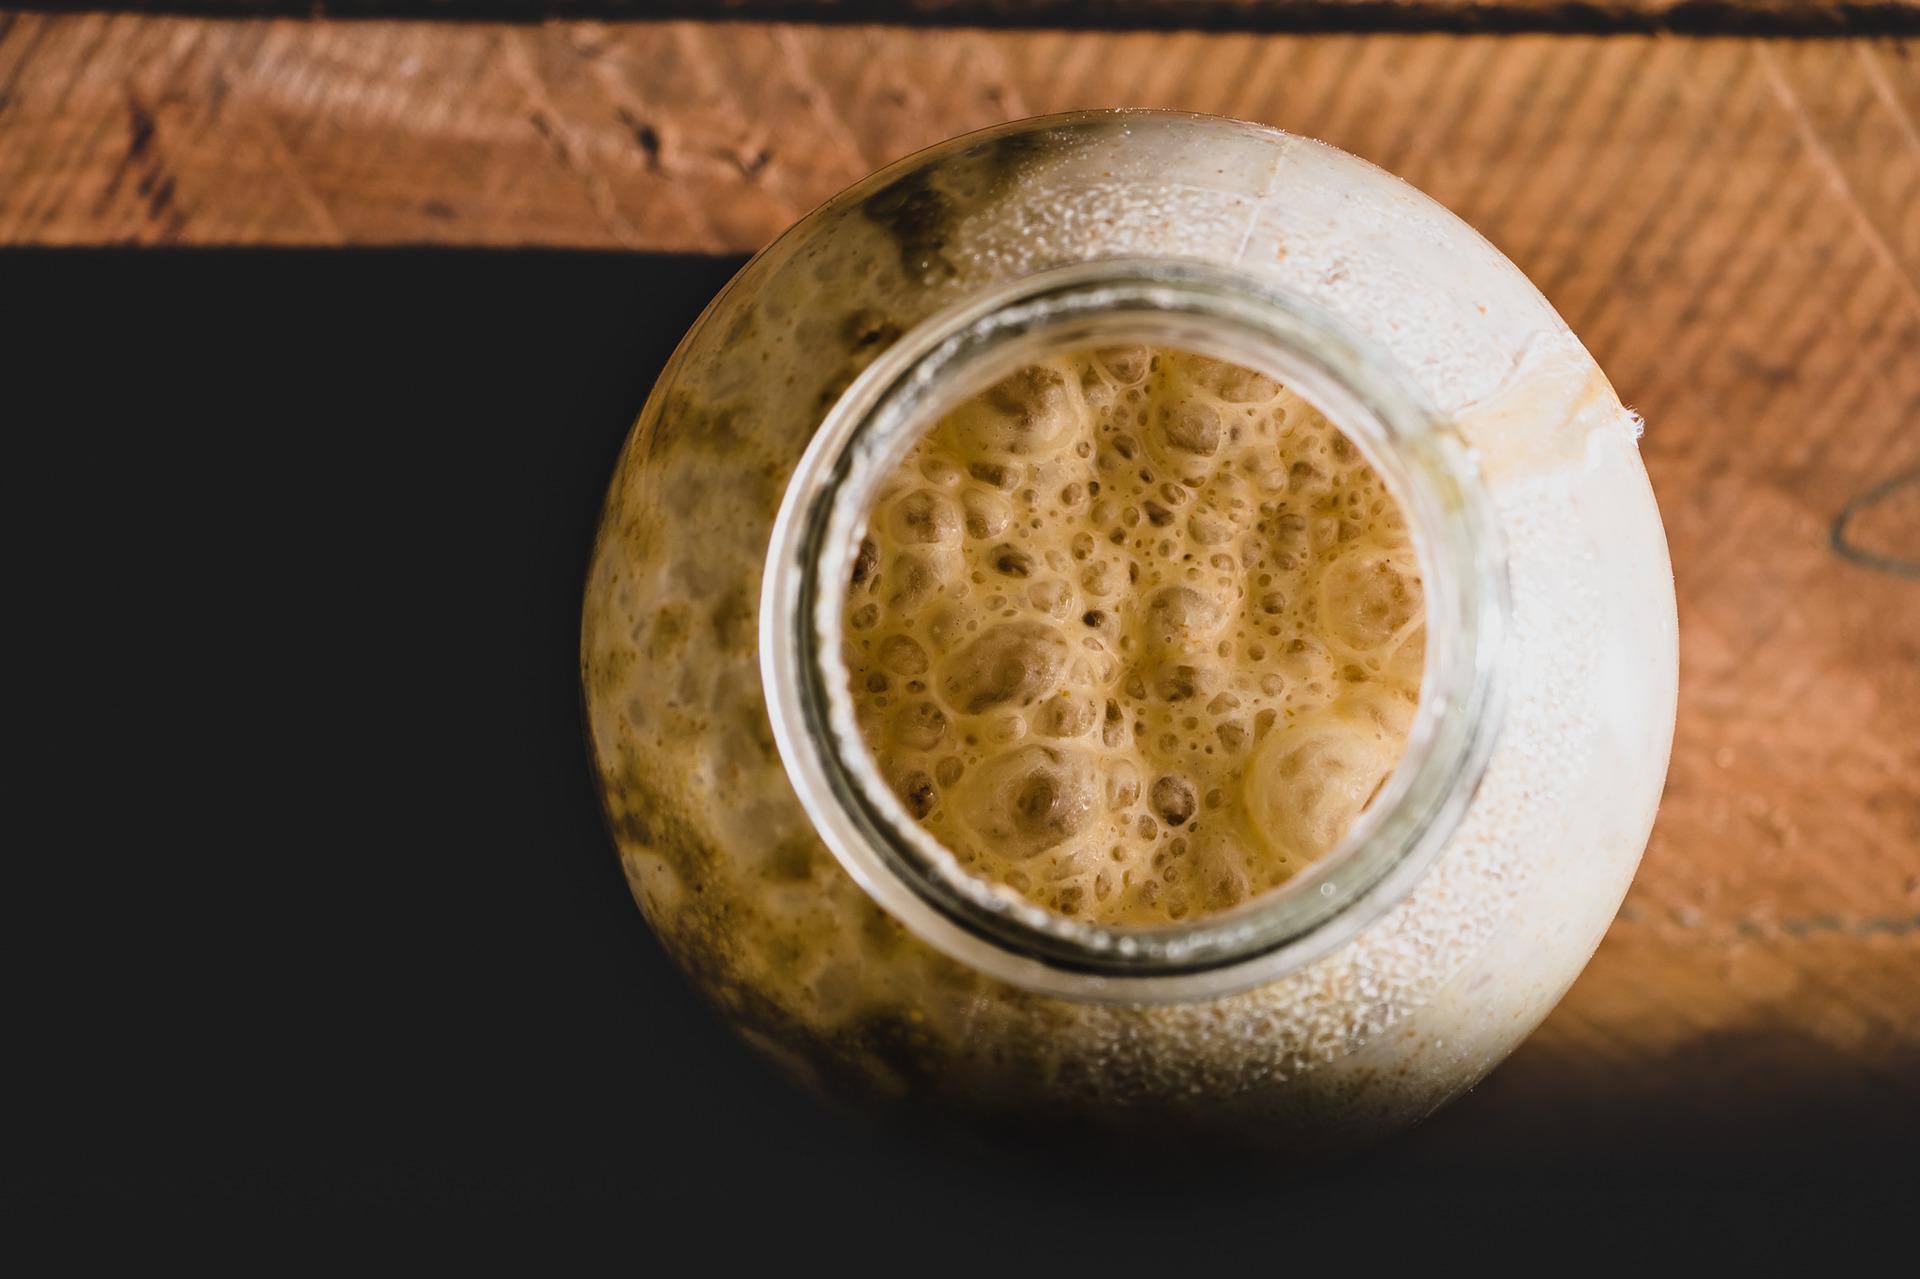 yeast fermentation process in a jar